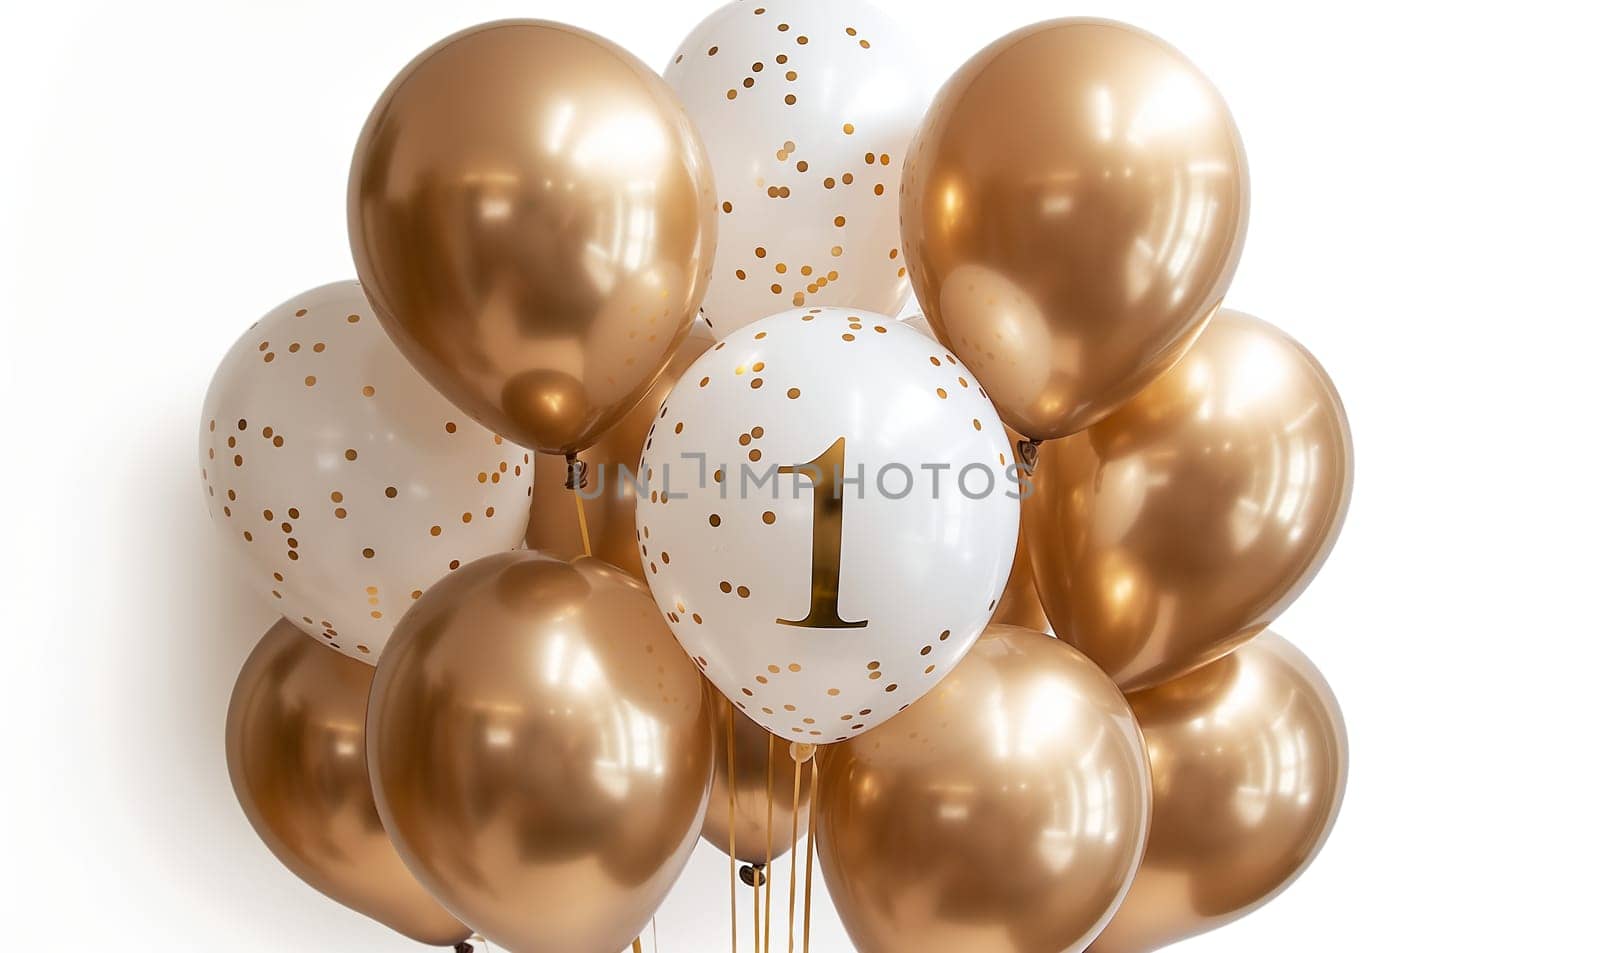 Golden Balloons Celebrating a First Anniversary by Fischeron